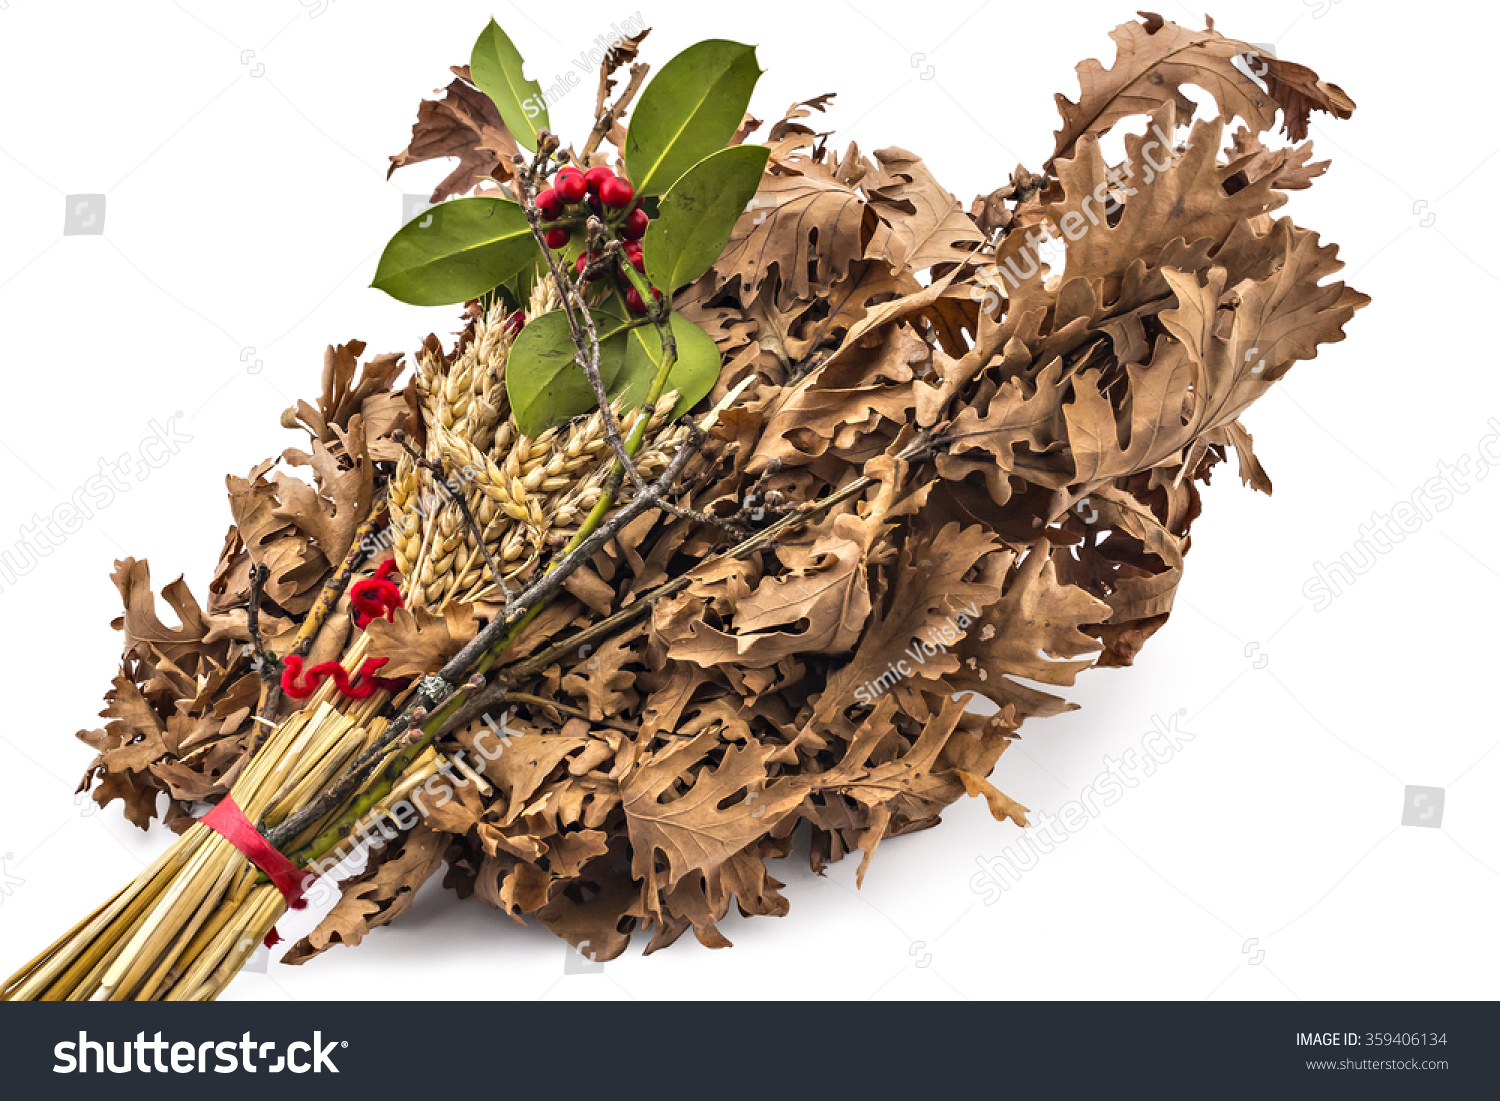 stock-photo-badnjak-yule-log-mistletoe-fir-branches-wheat-serbian-christmas-359406134.jpg